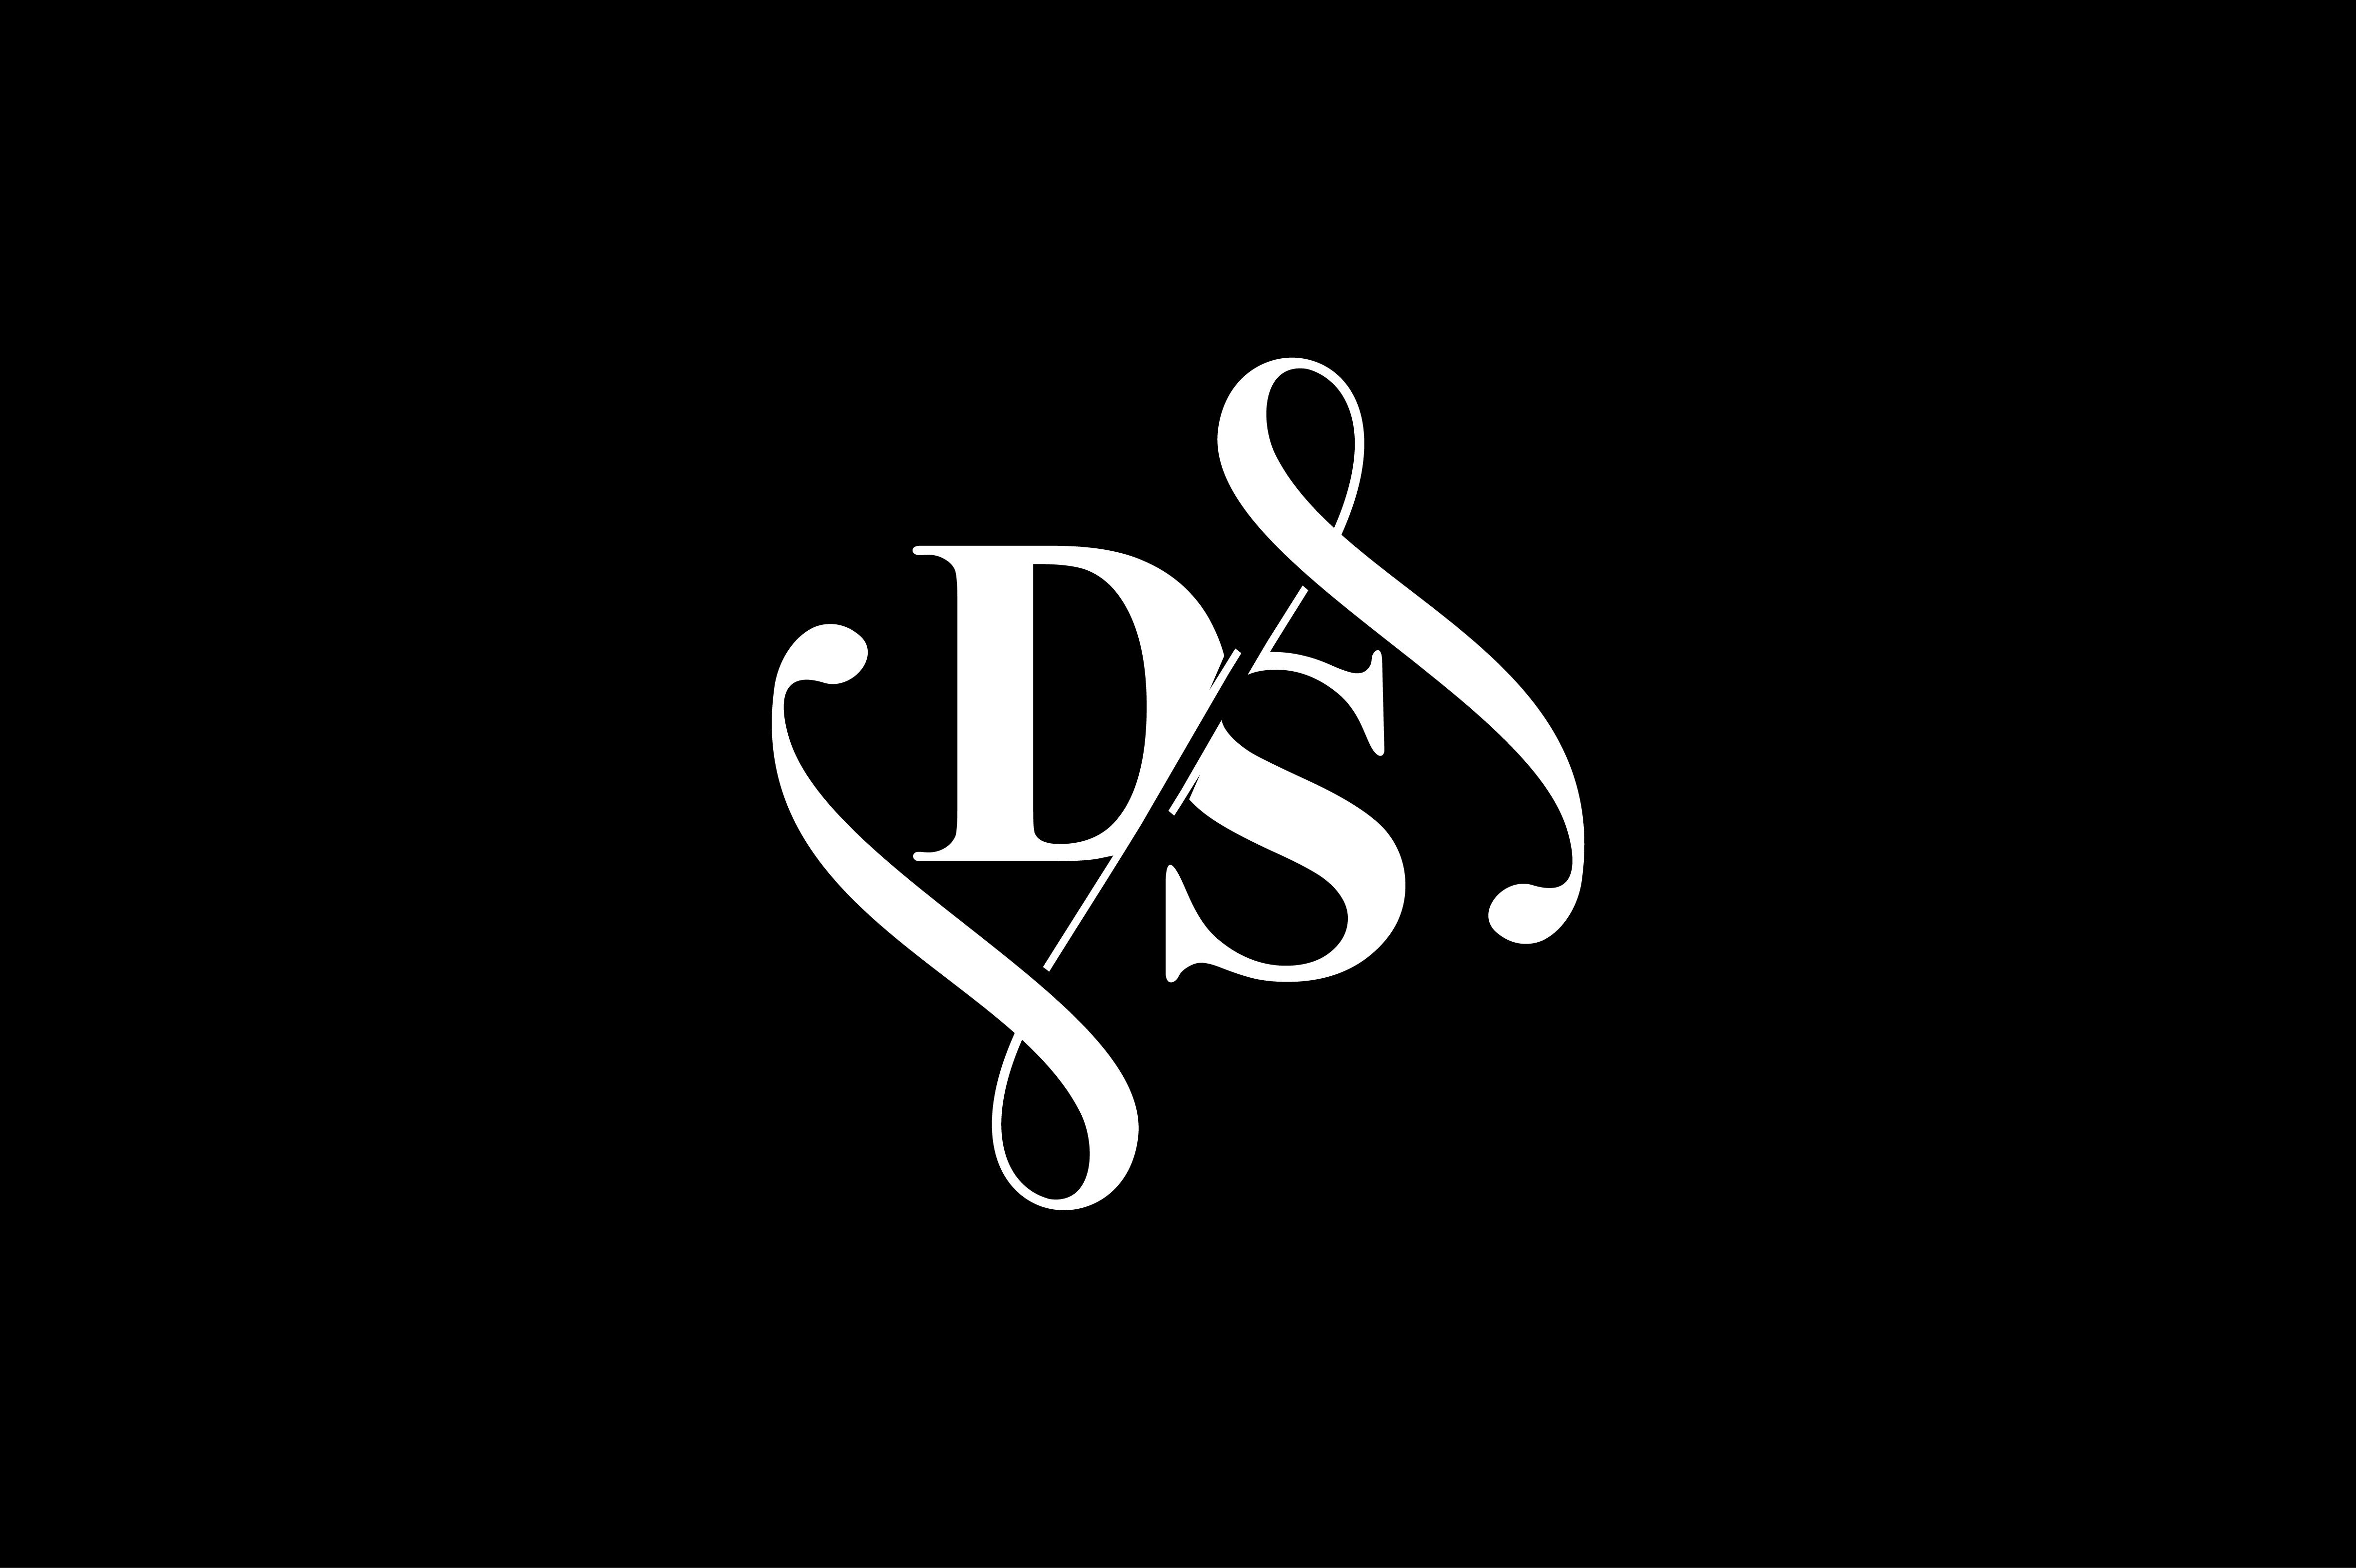 DS Monogram logo Design V6 By Vectorseller | TheHungryJPEG